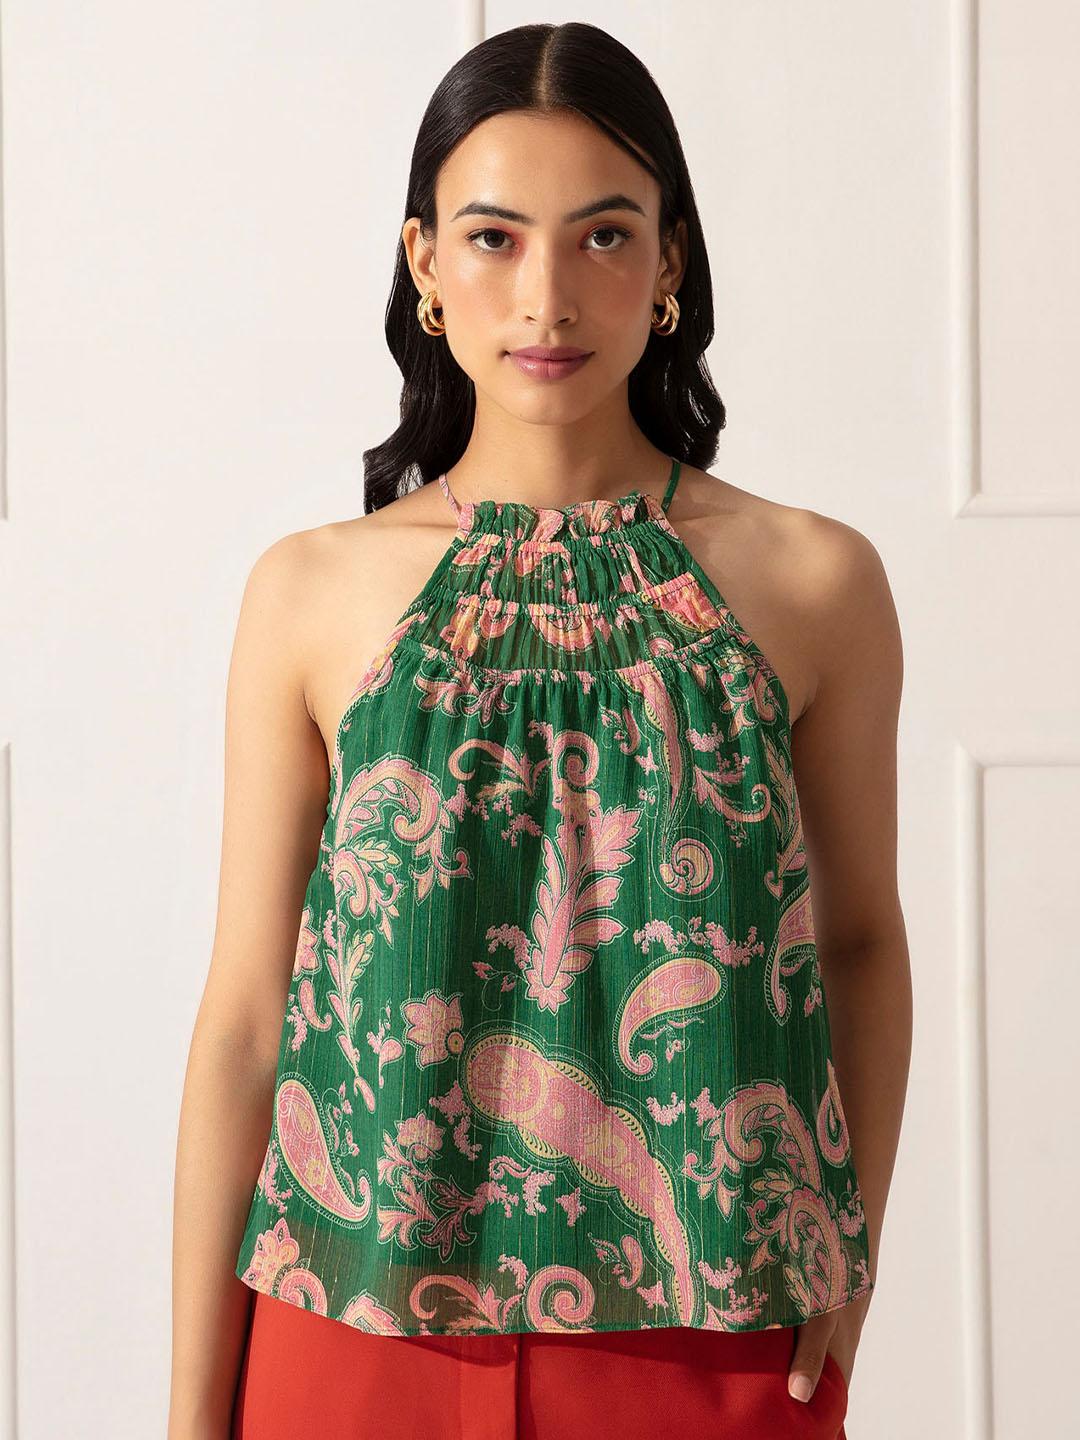 20dresses green & pink print halter neck chiffon top